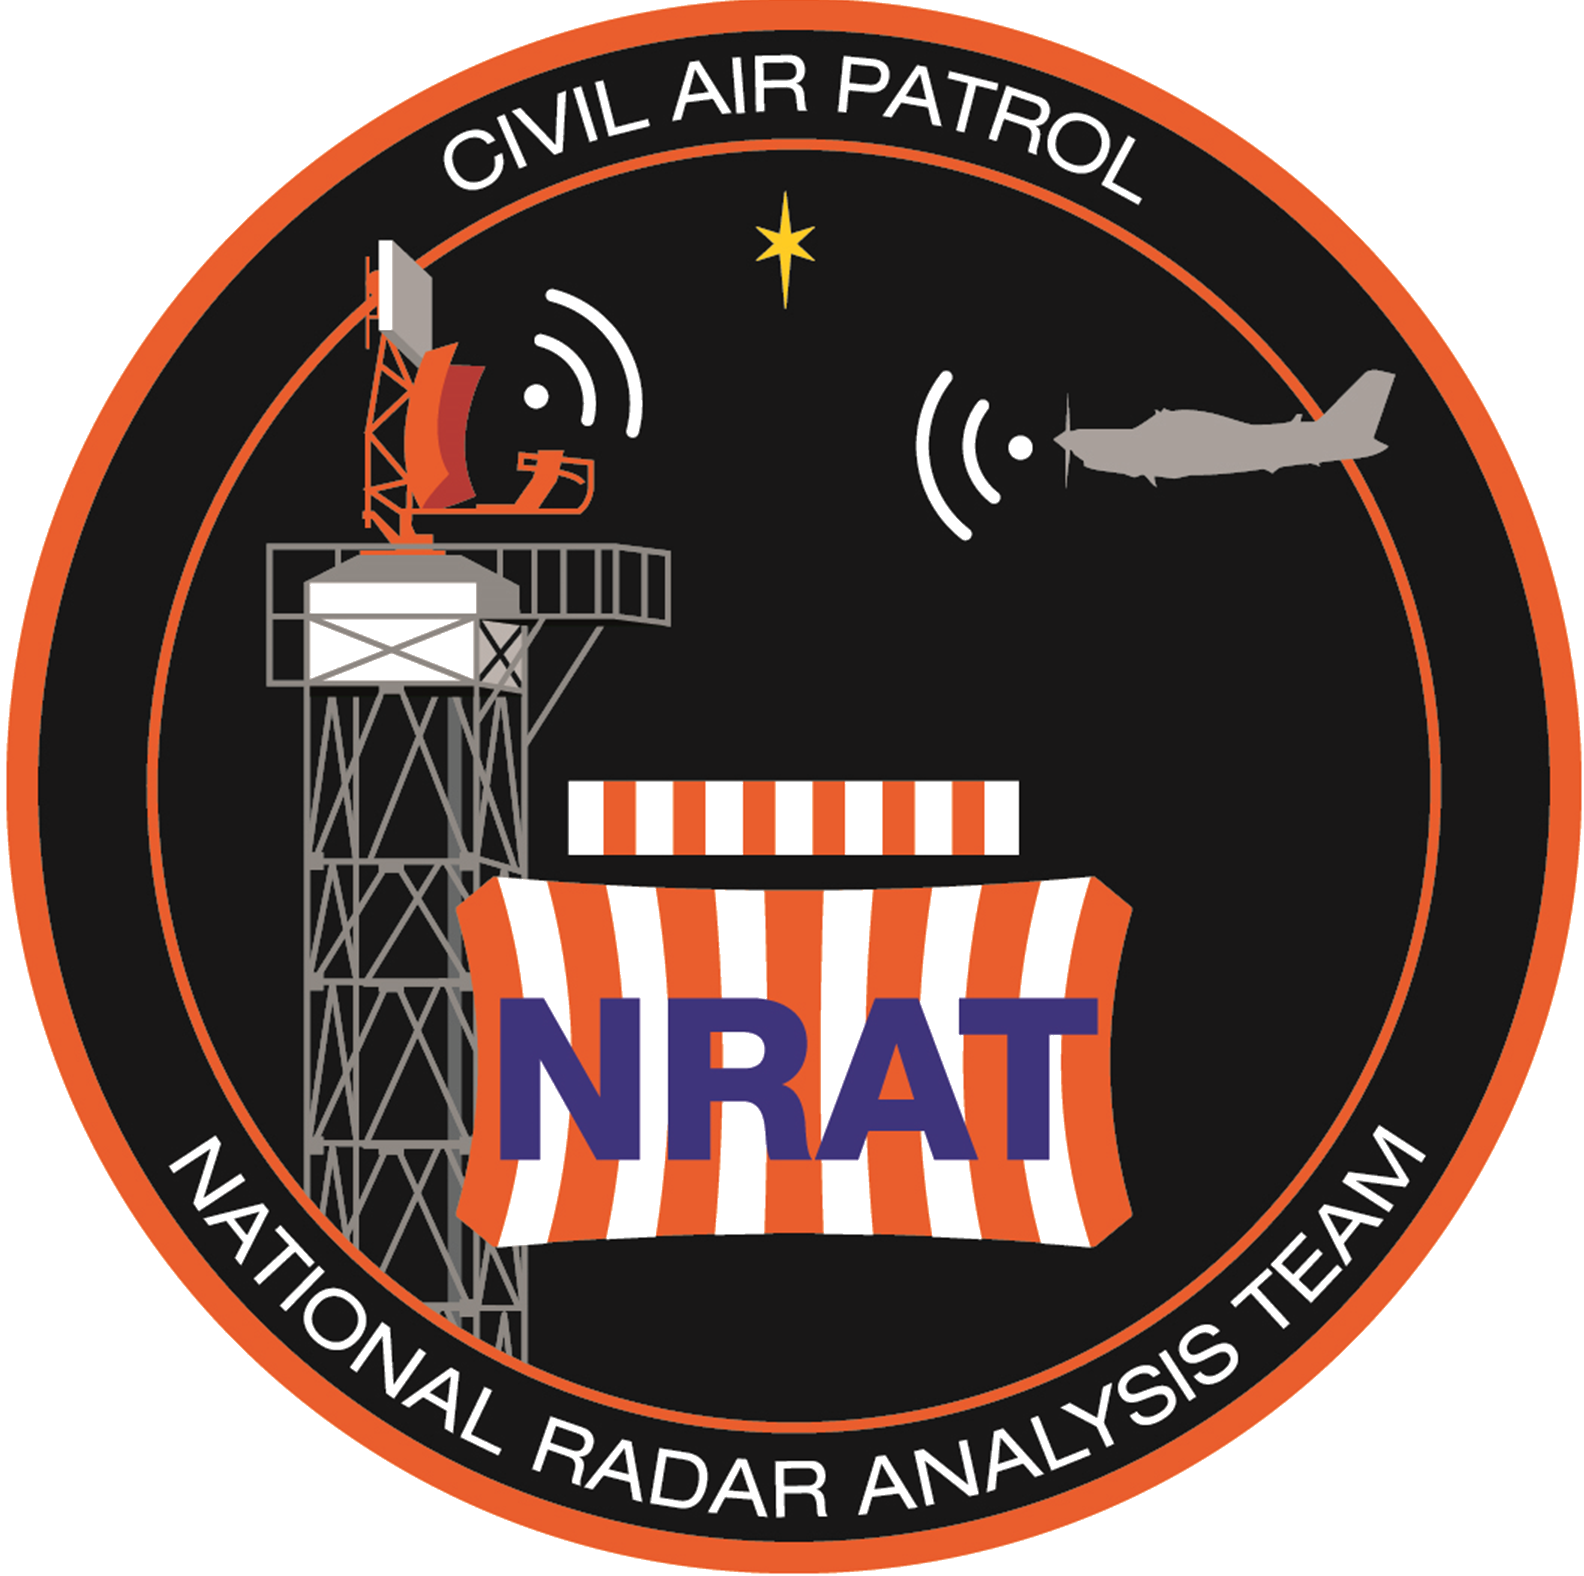 National Radar Analysis Team (NRAT)